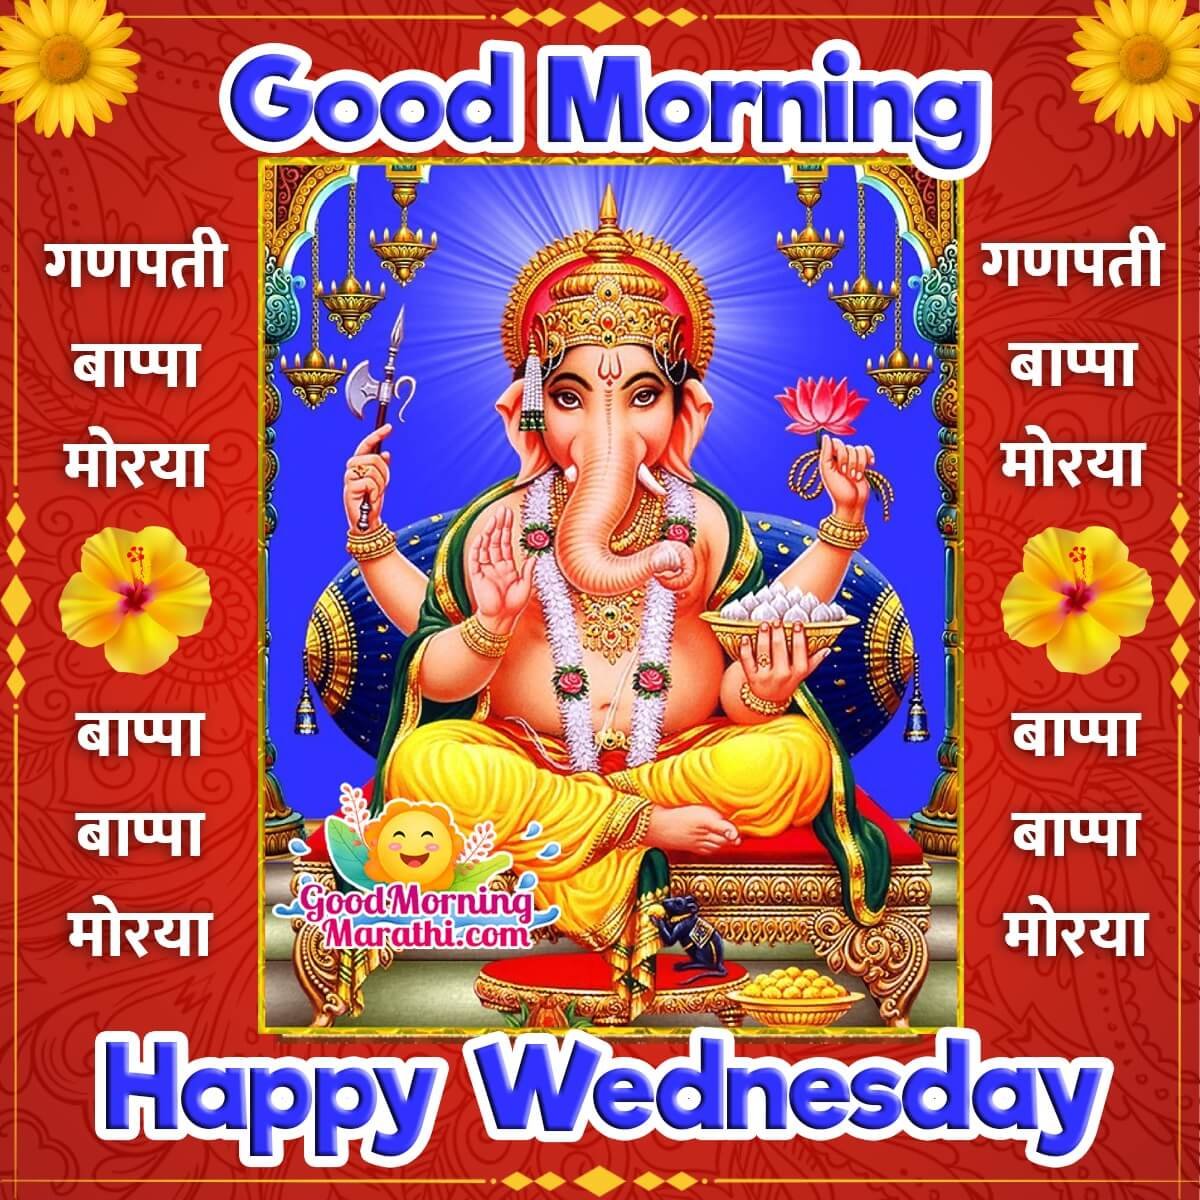 Good Morning Happy Wednesday Ganpati Bappa Morya